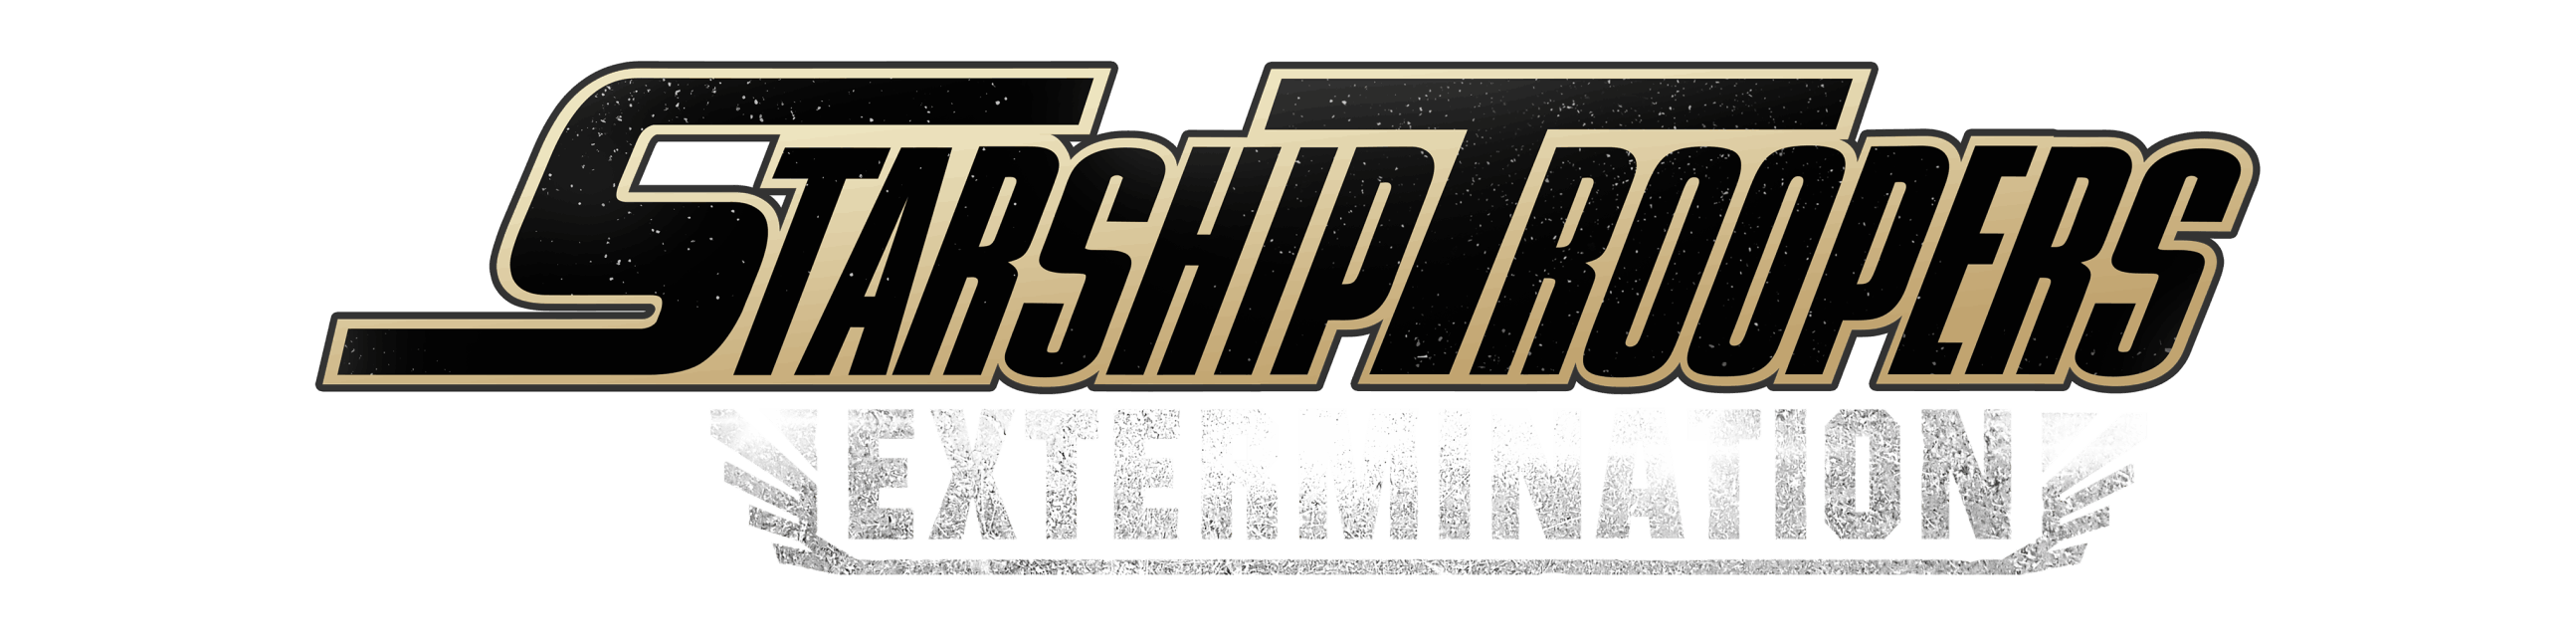 Starship Troopers Extermination logo